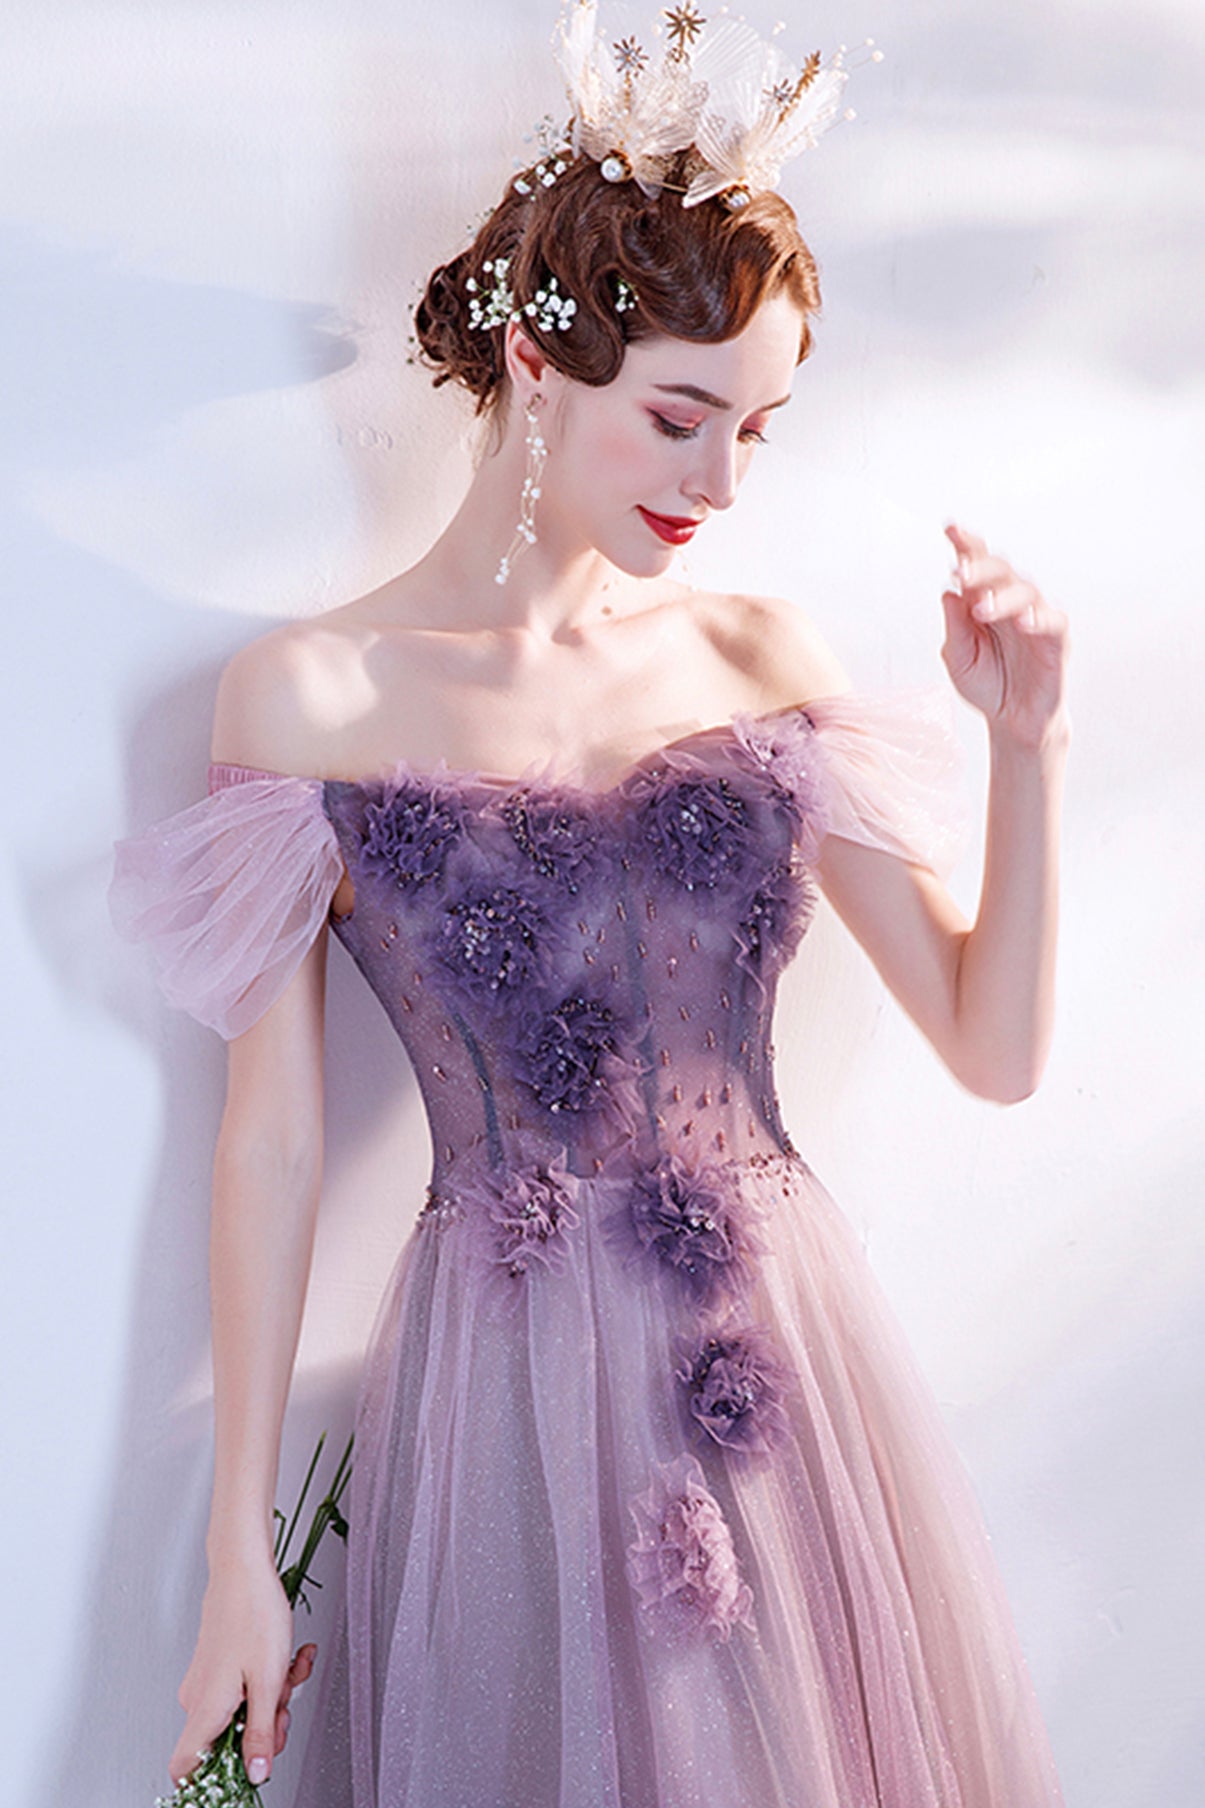 Purple tulle long A line prom dress evening dress  8740